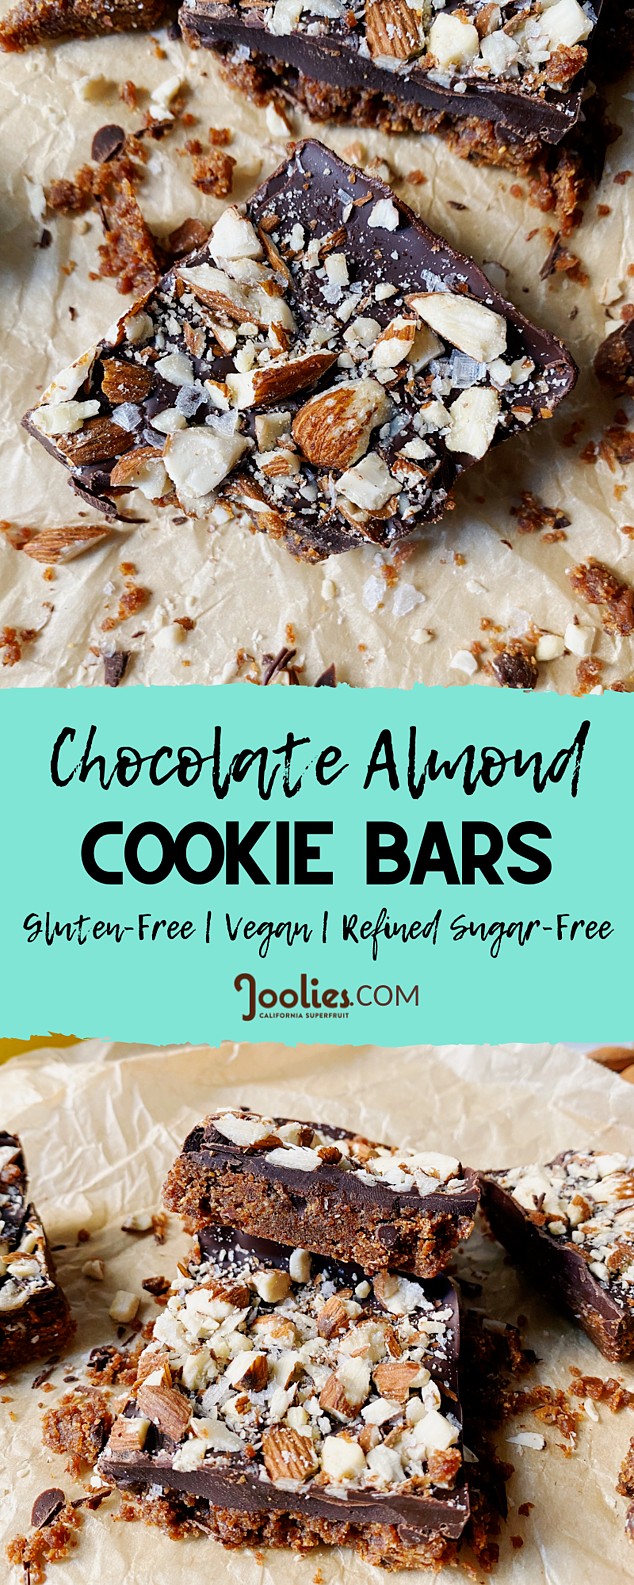 chocolate almond cookie bars_11zon